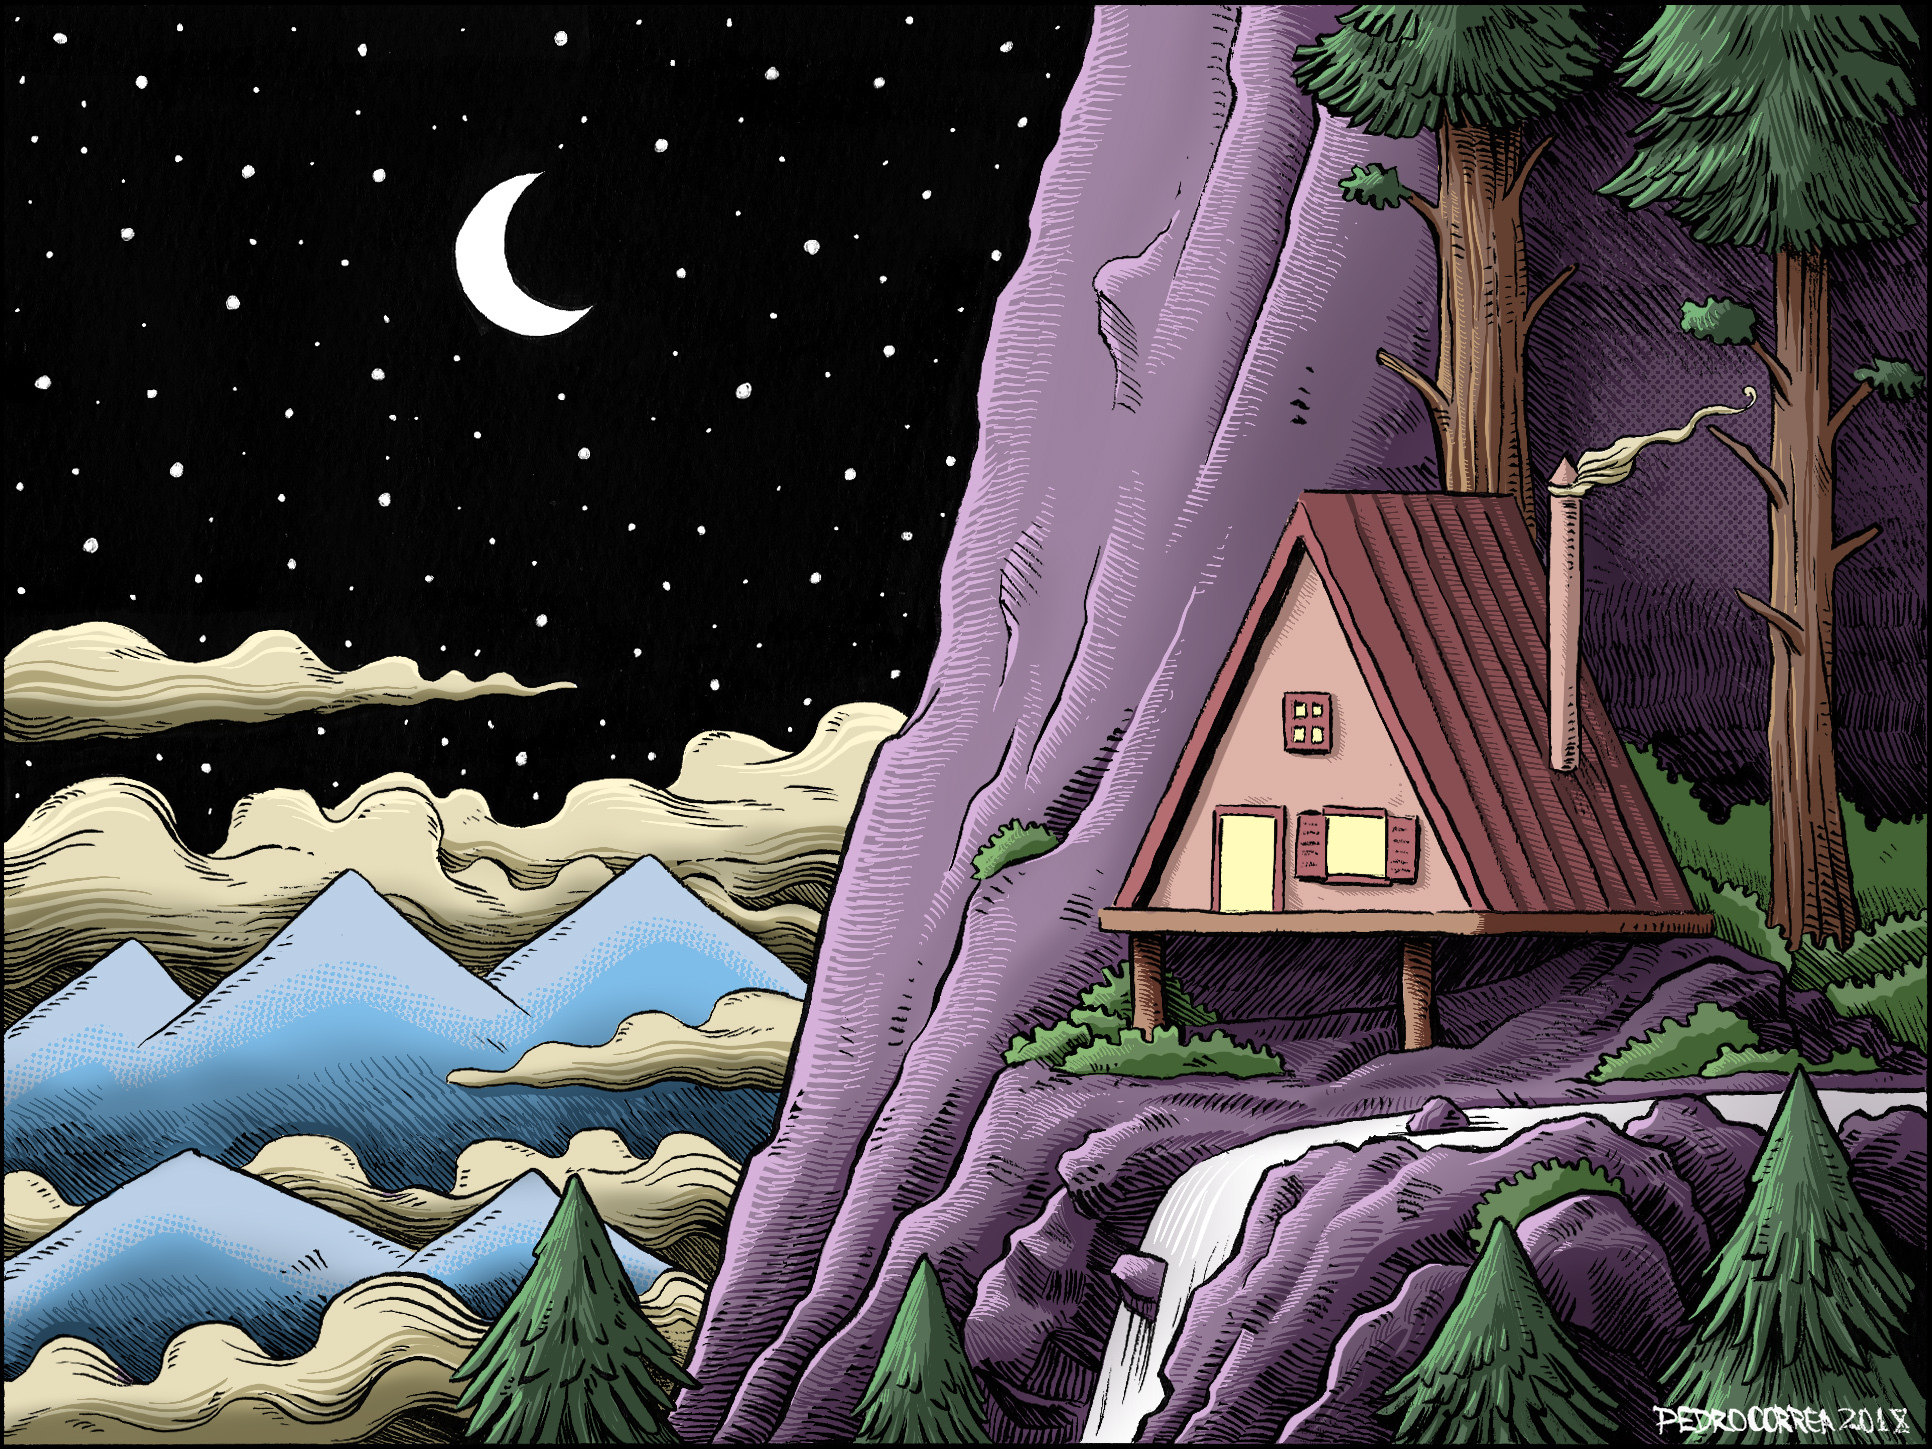 Mountain home by Pedro Correa